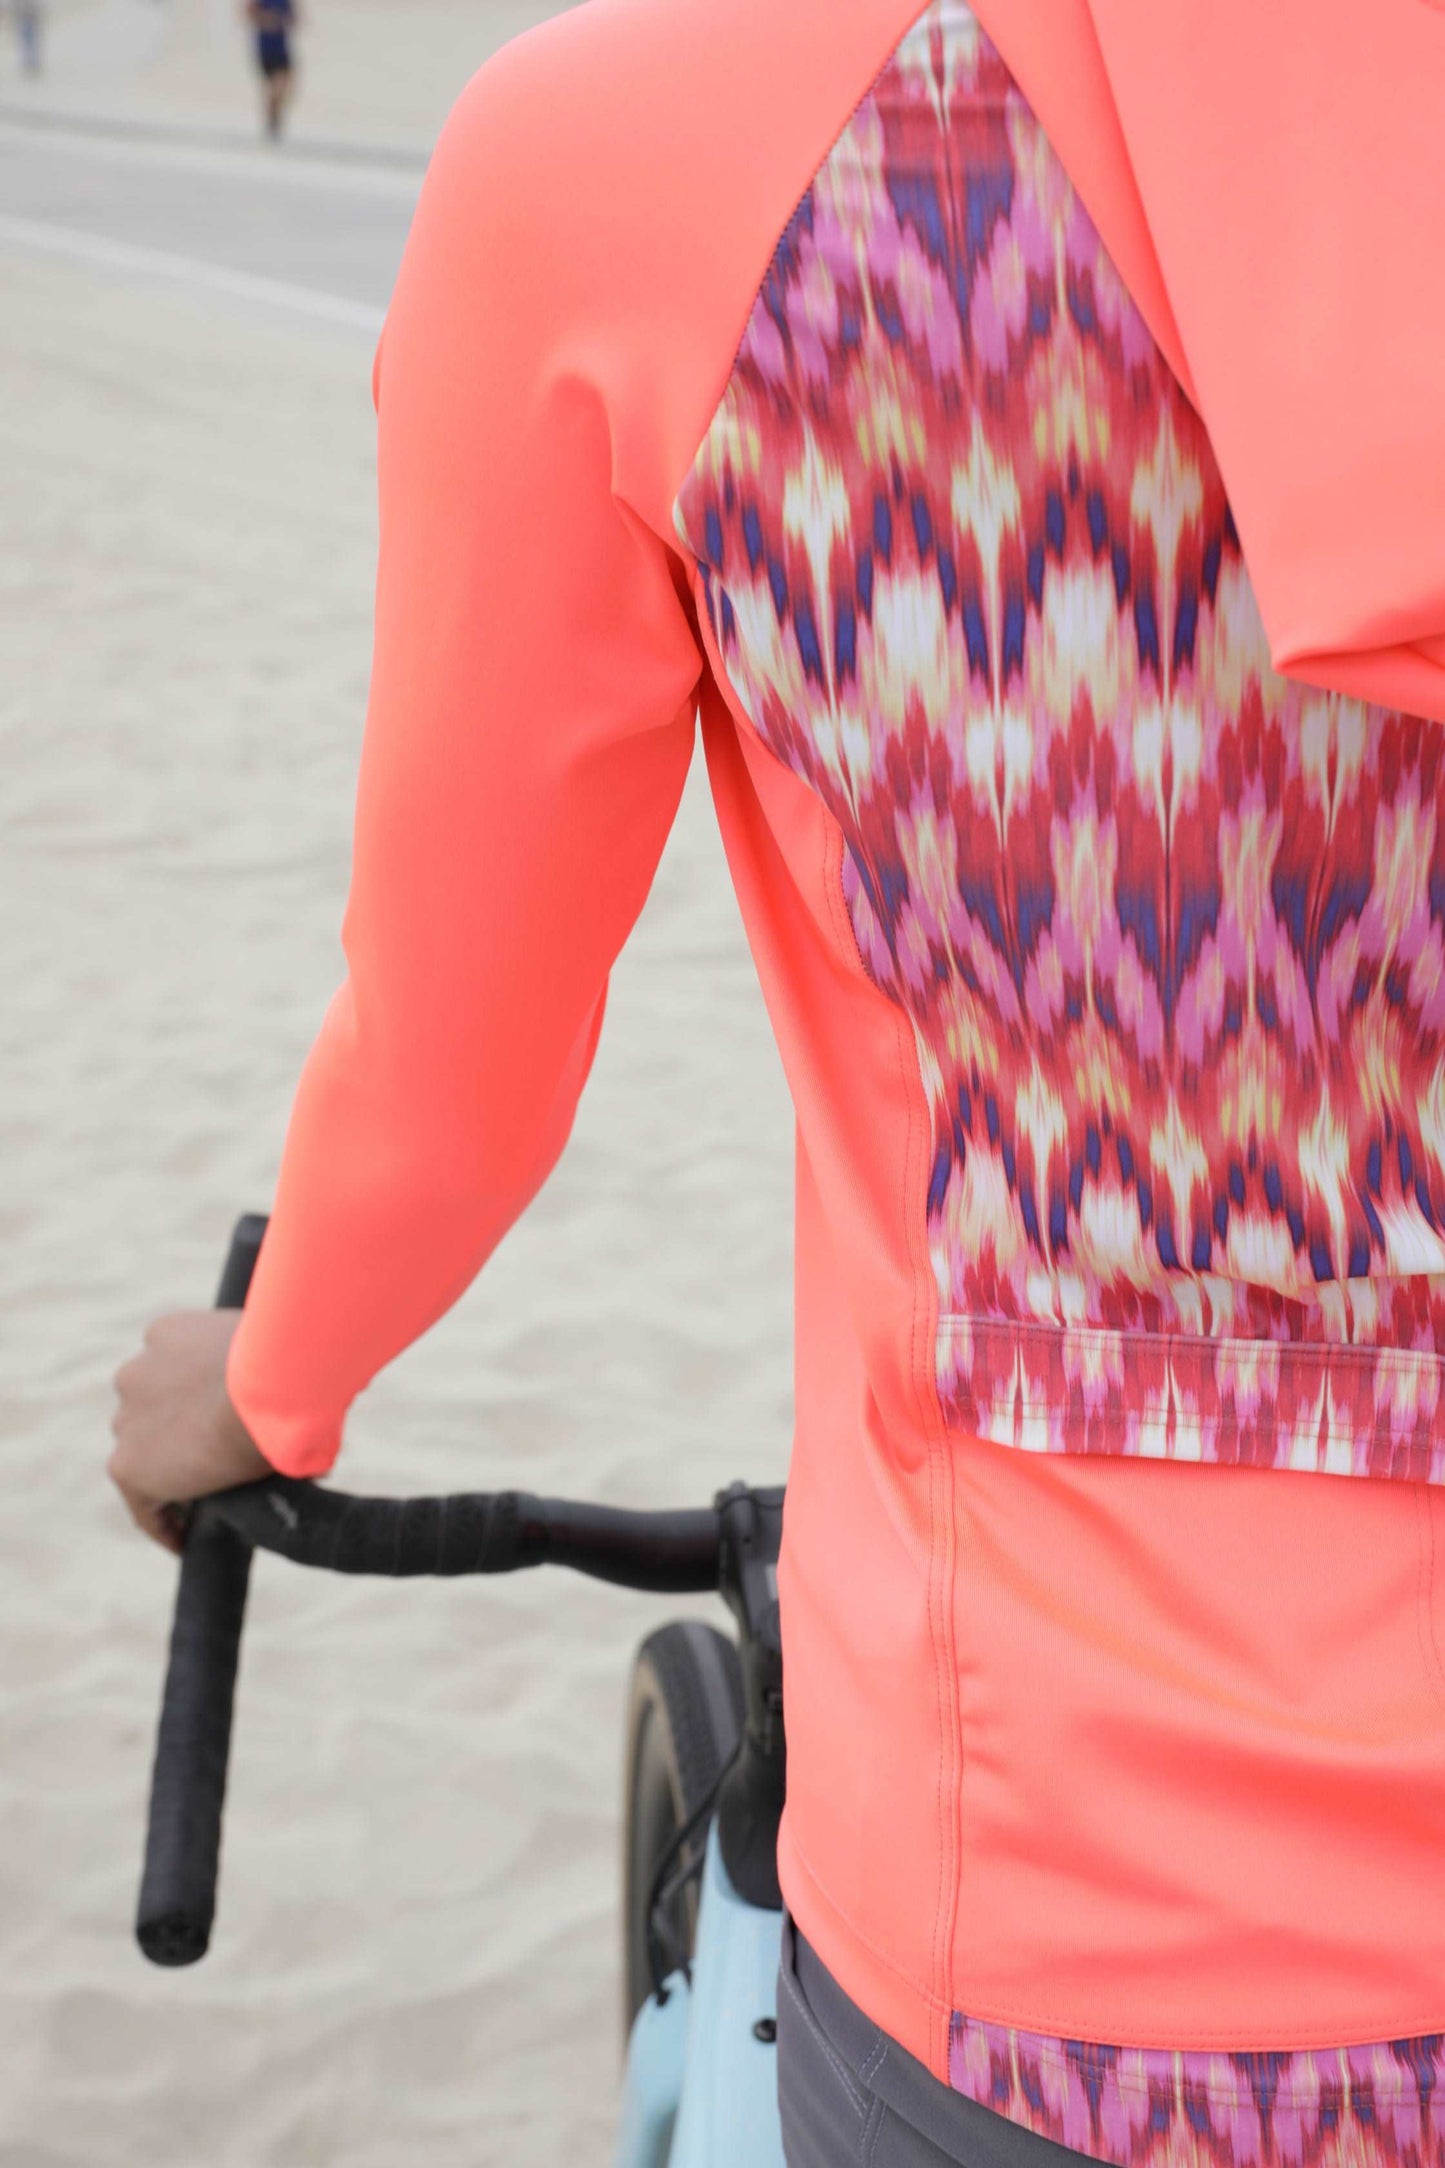 Moxie Tee Heavier Weight hoodie - Moxie Cycling:  Bike Jerseys, Bike Shorts & Bike Pants Made for Women